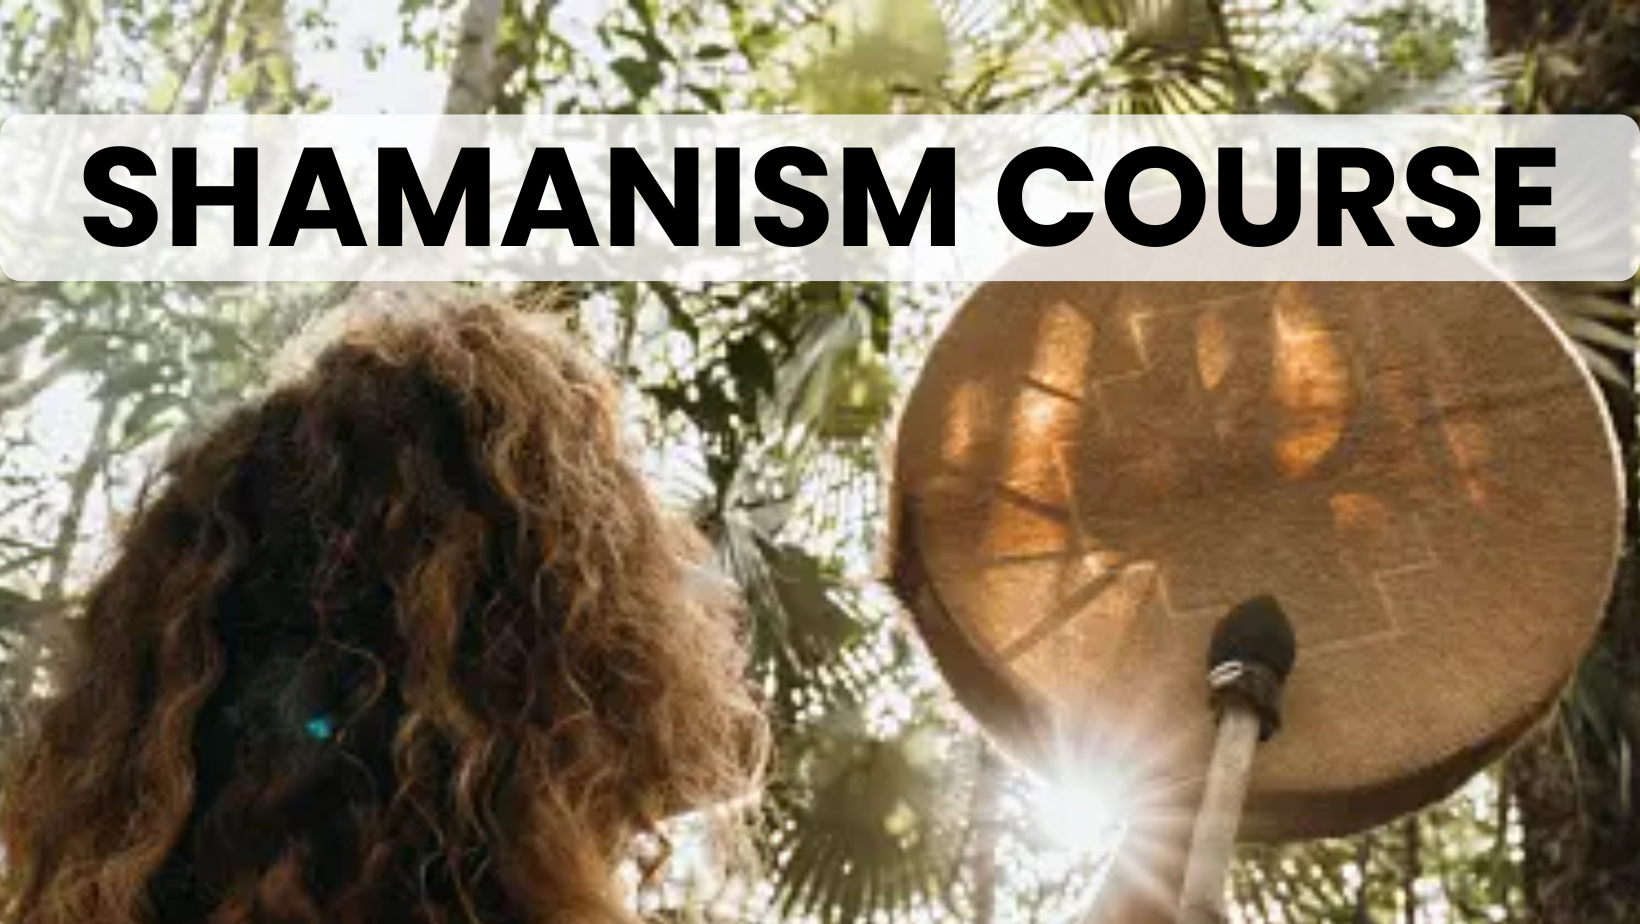 Shamanism Courses in Bangalore